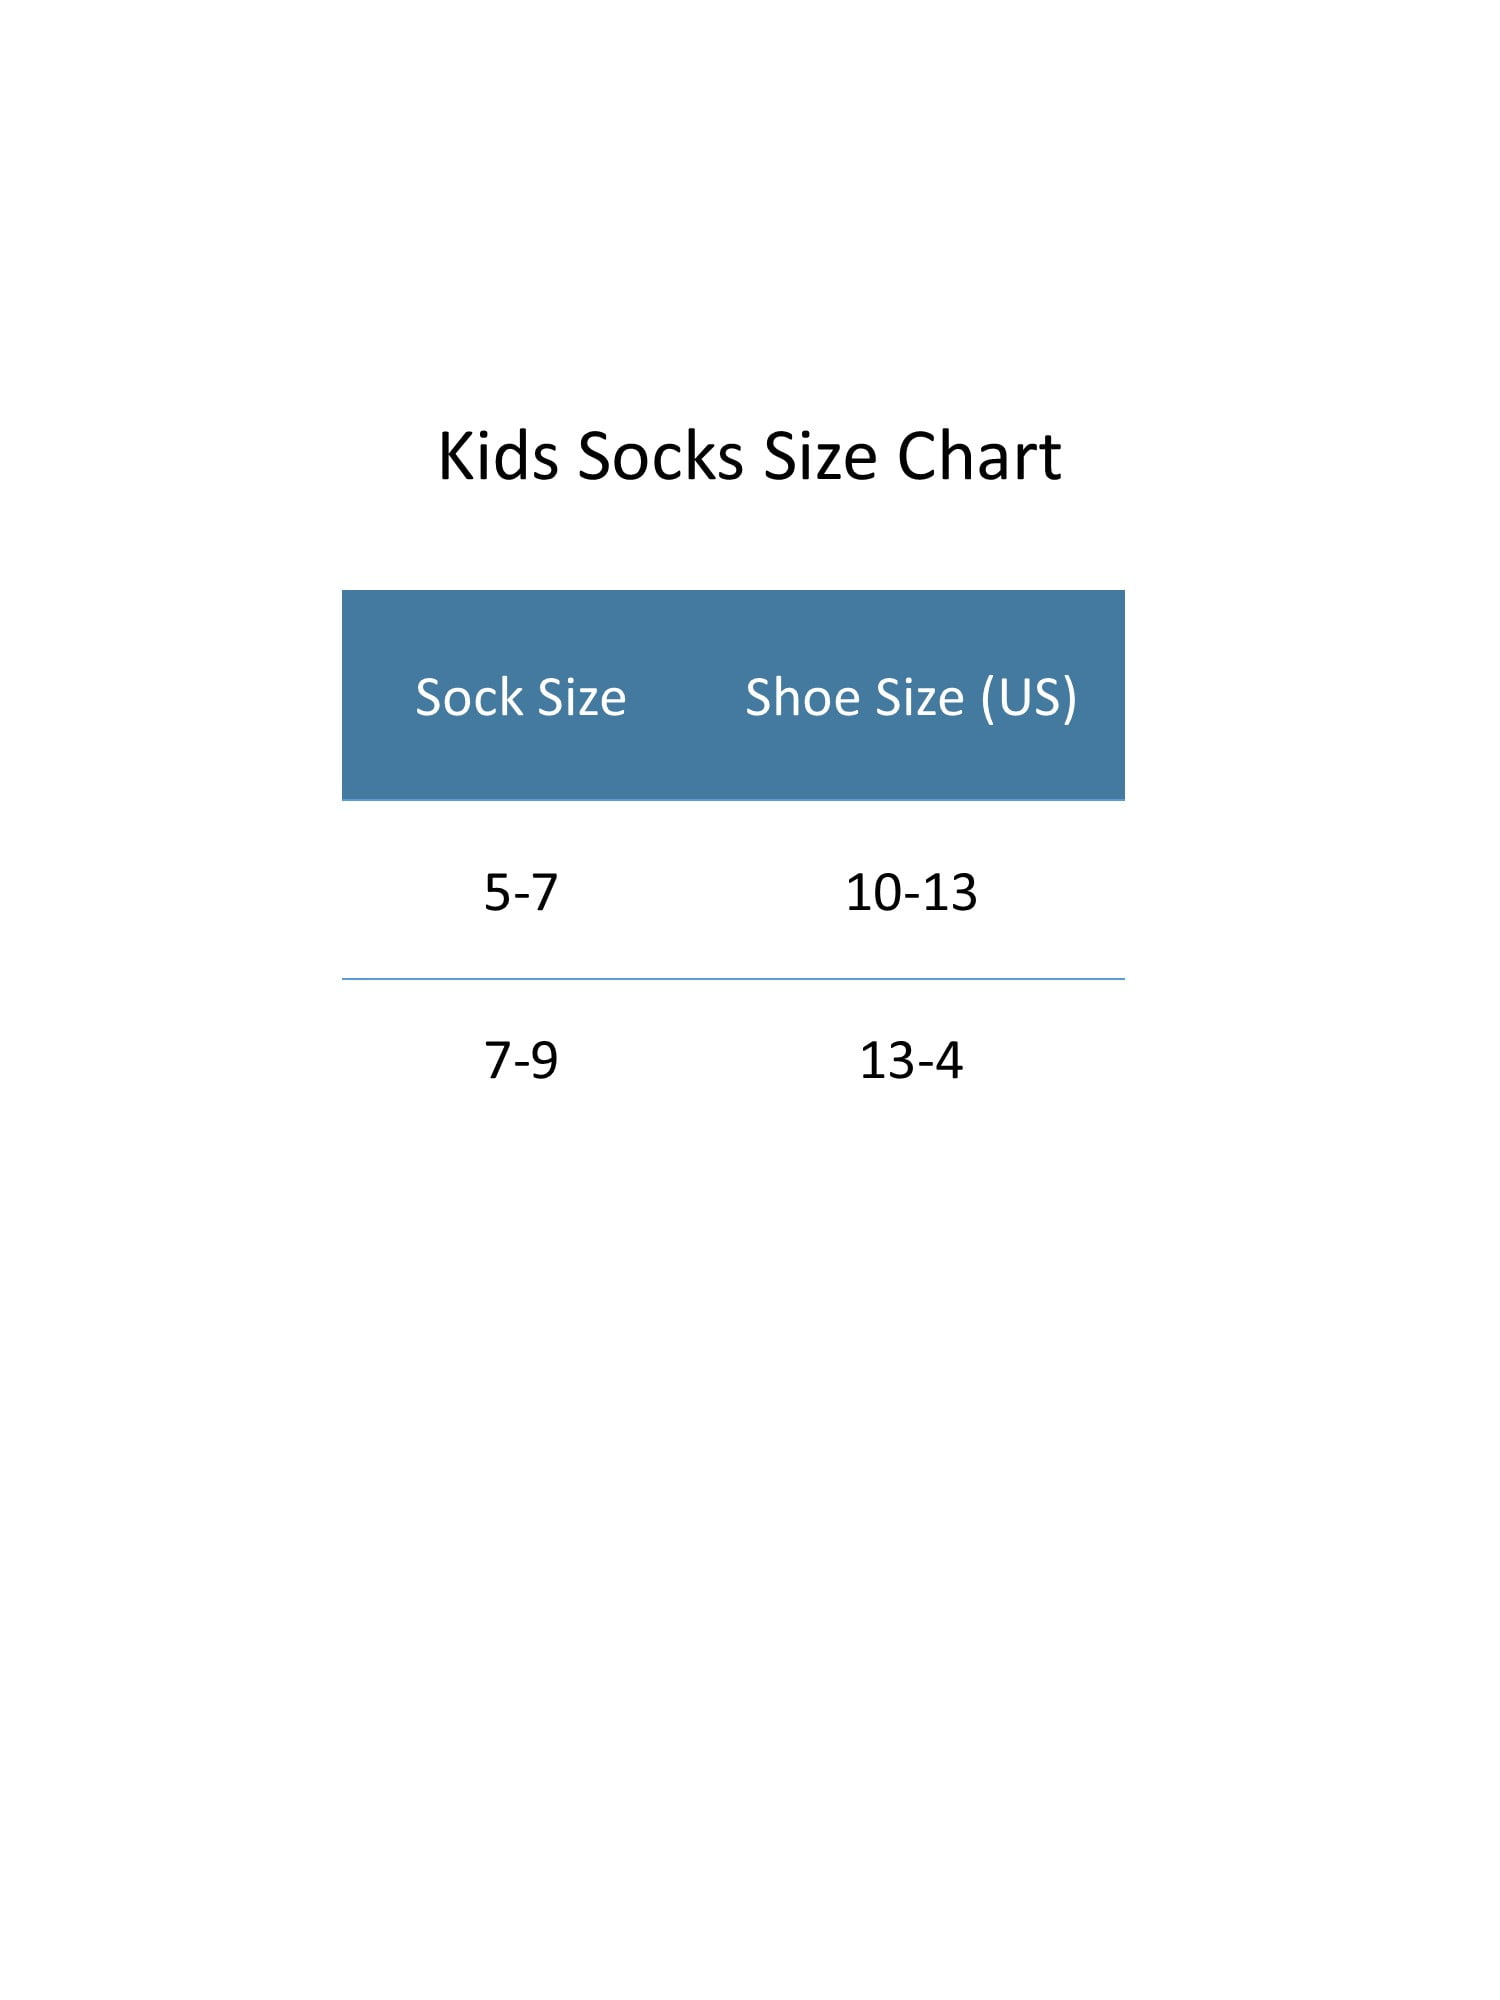 Walmart Shoe Size Chart Canada